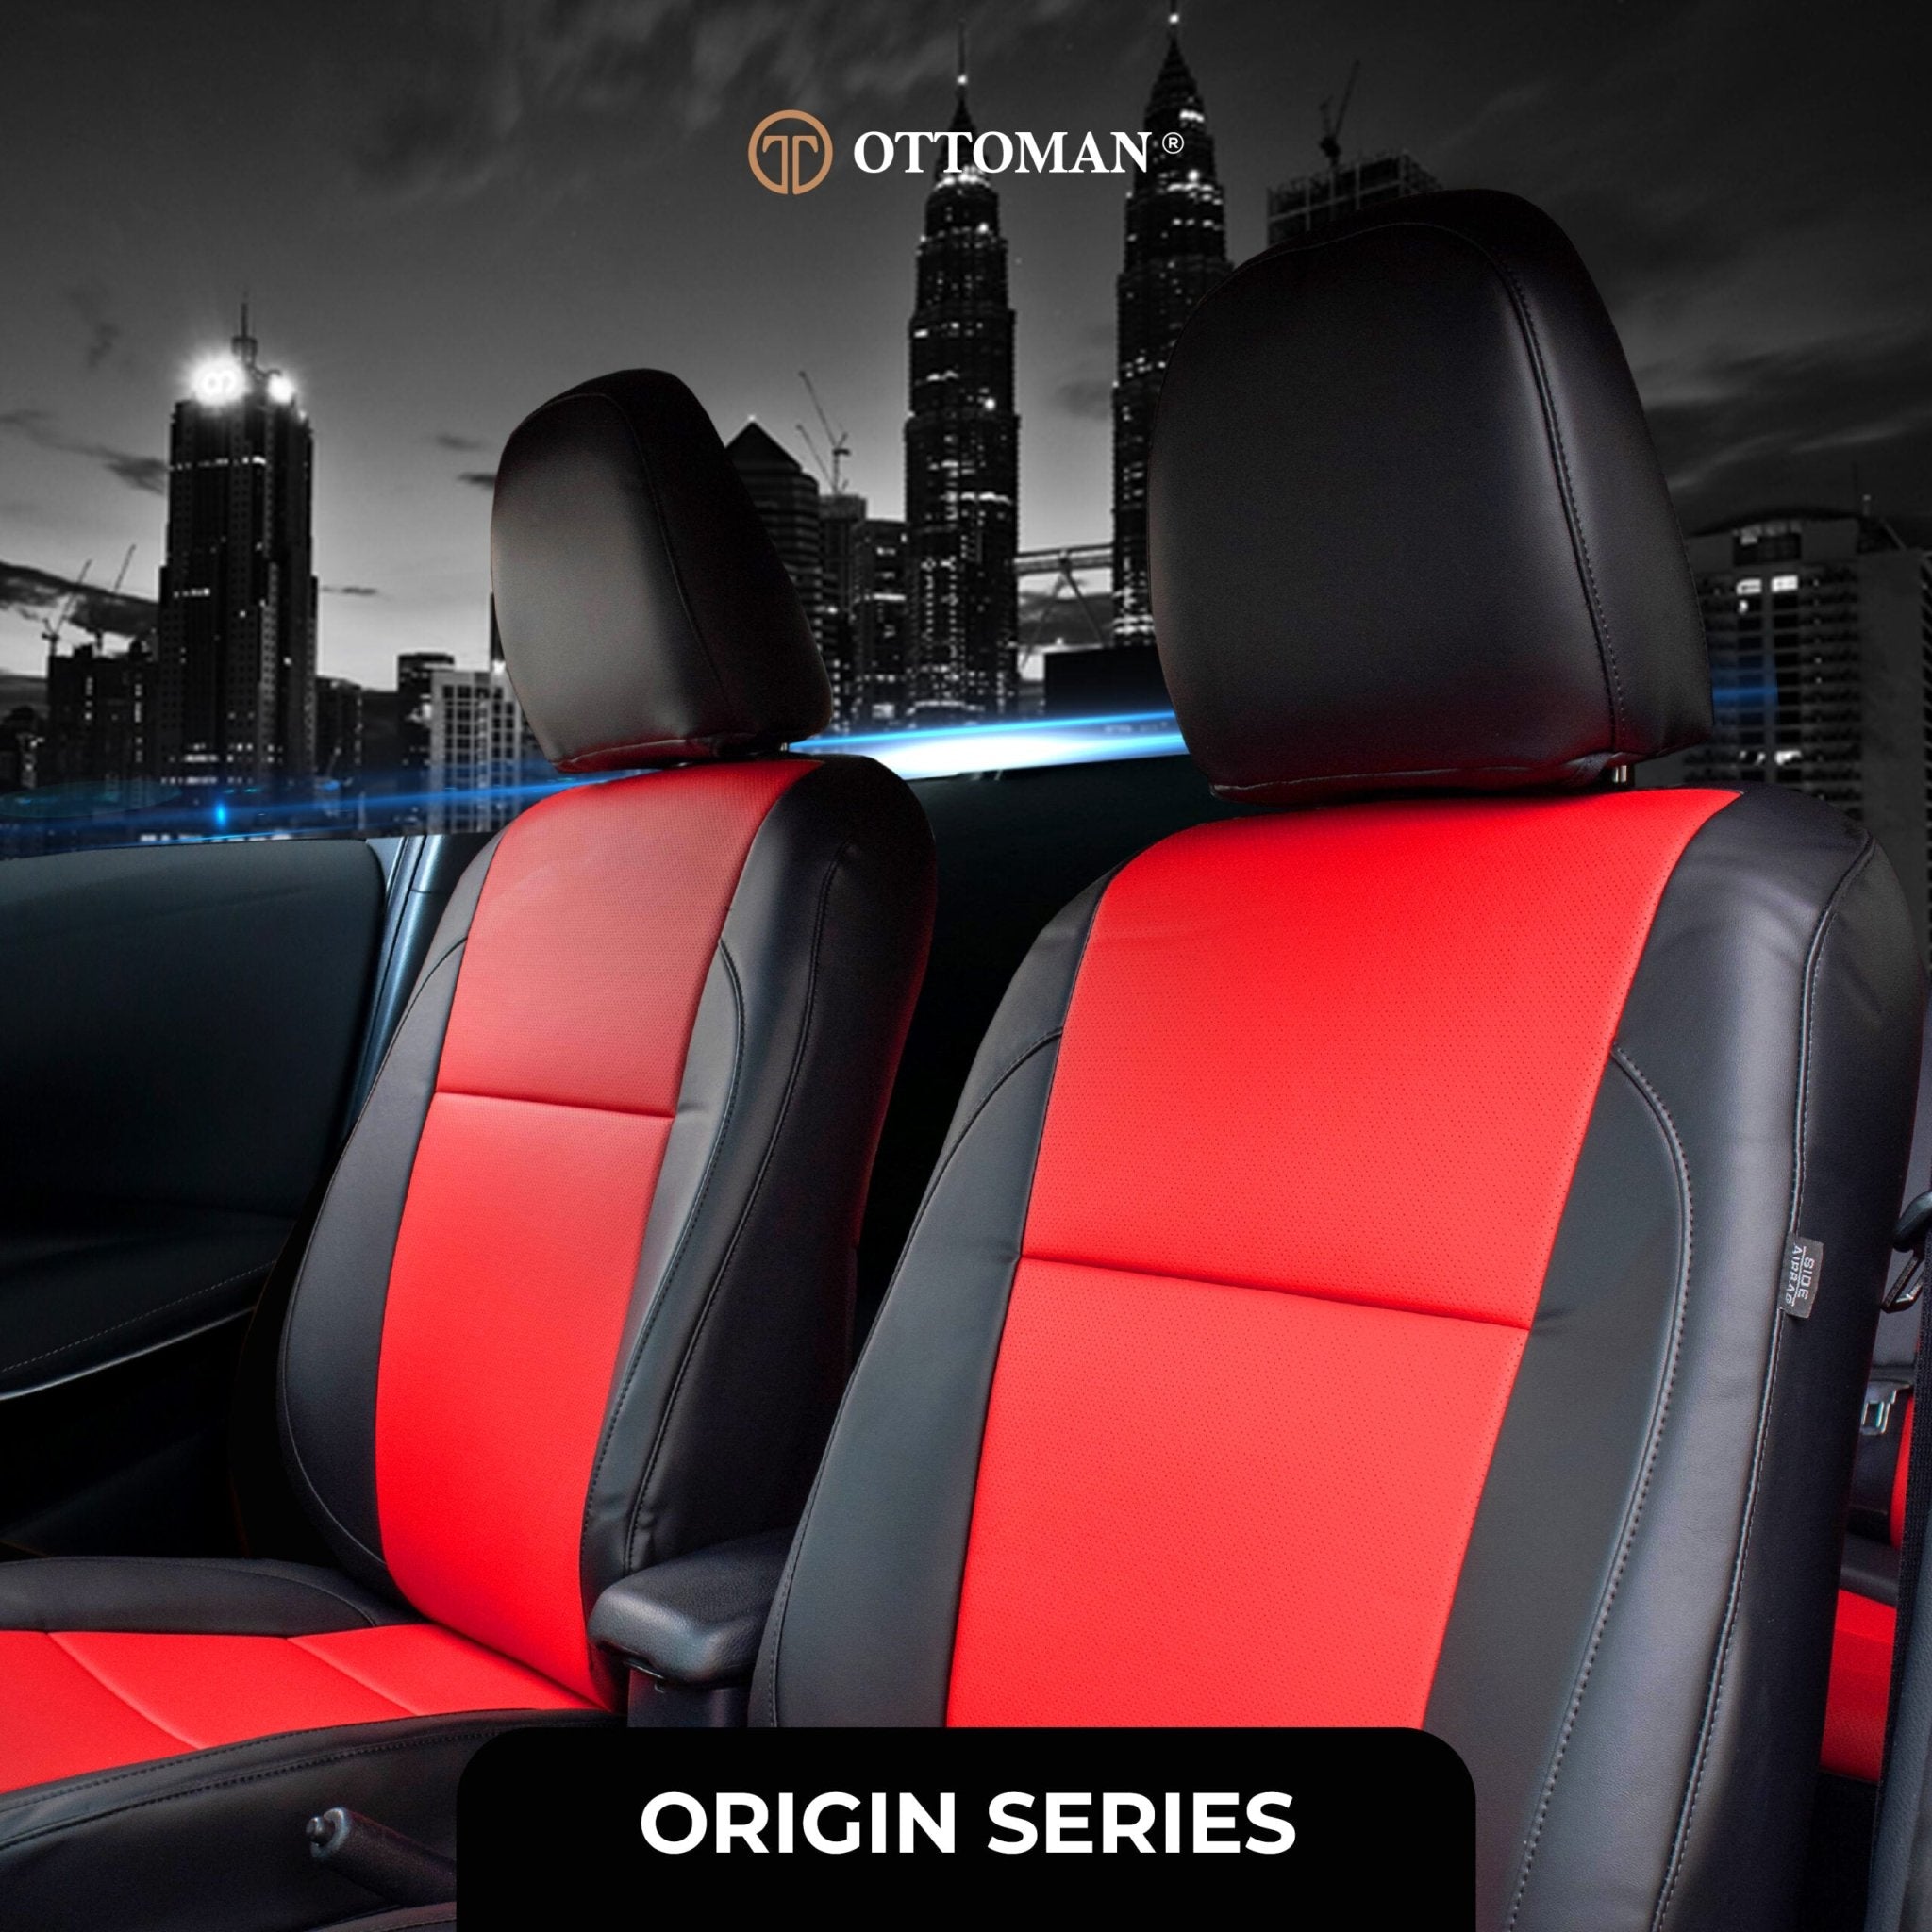 Isuzu MU-X (2015-Present) Ottoman Seat Cover Seat Cover in Klang Selangor, Penang, Johor Bahru - Ottoman Car Mats